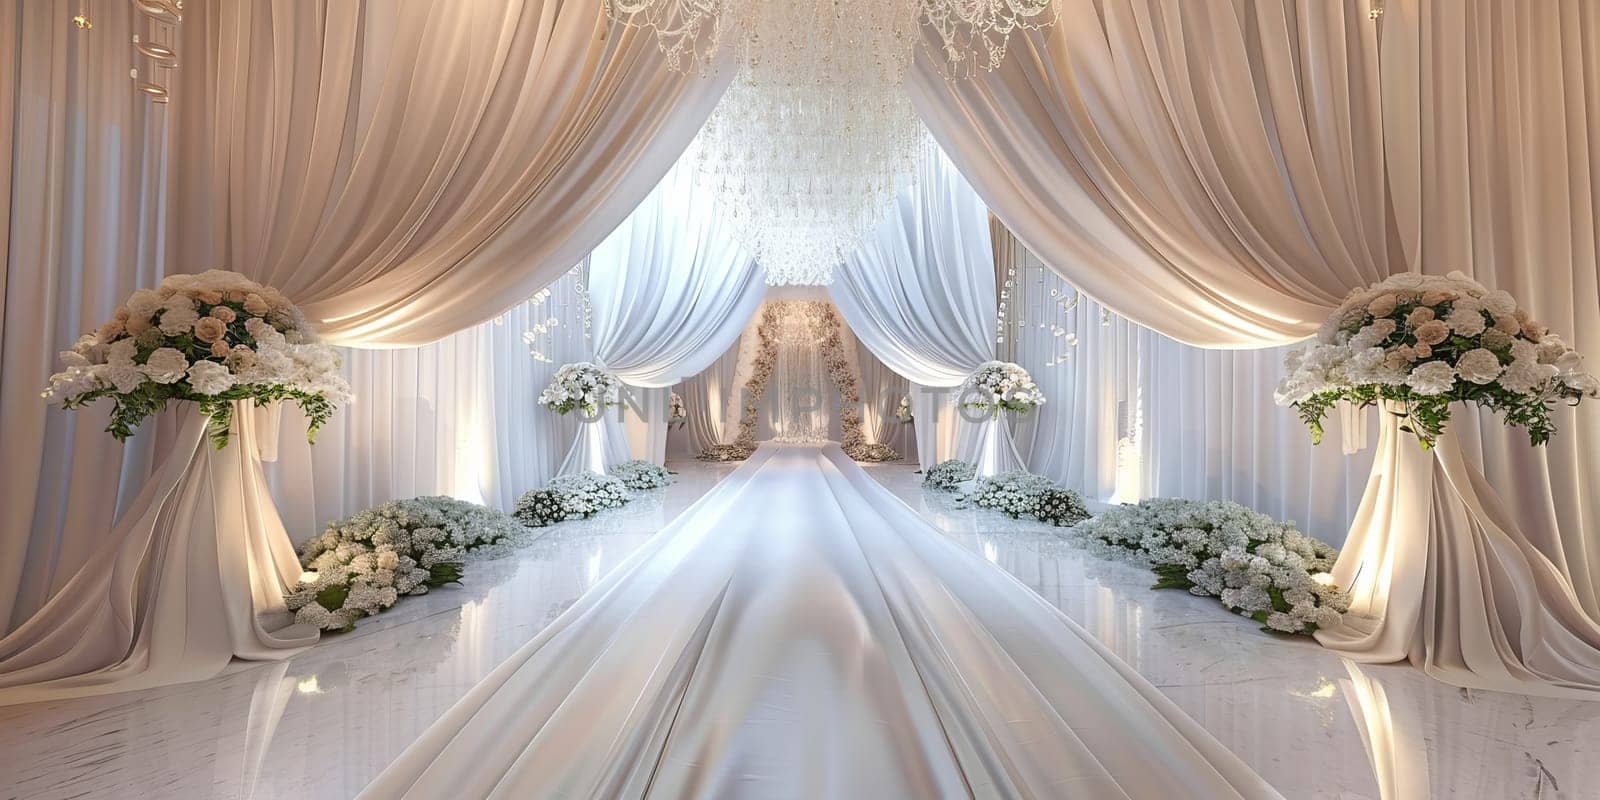 Elegant wedding aisle adorned with white floral arrangements by ailike